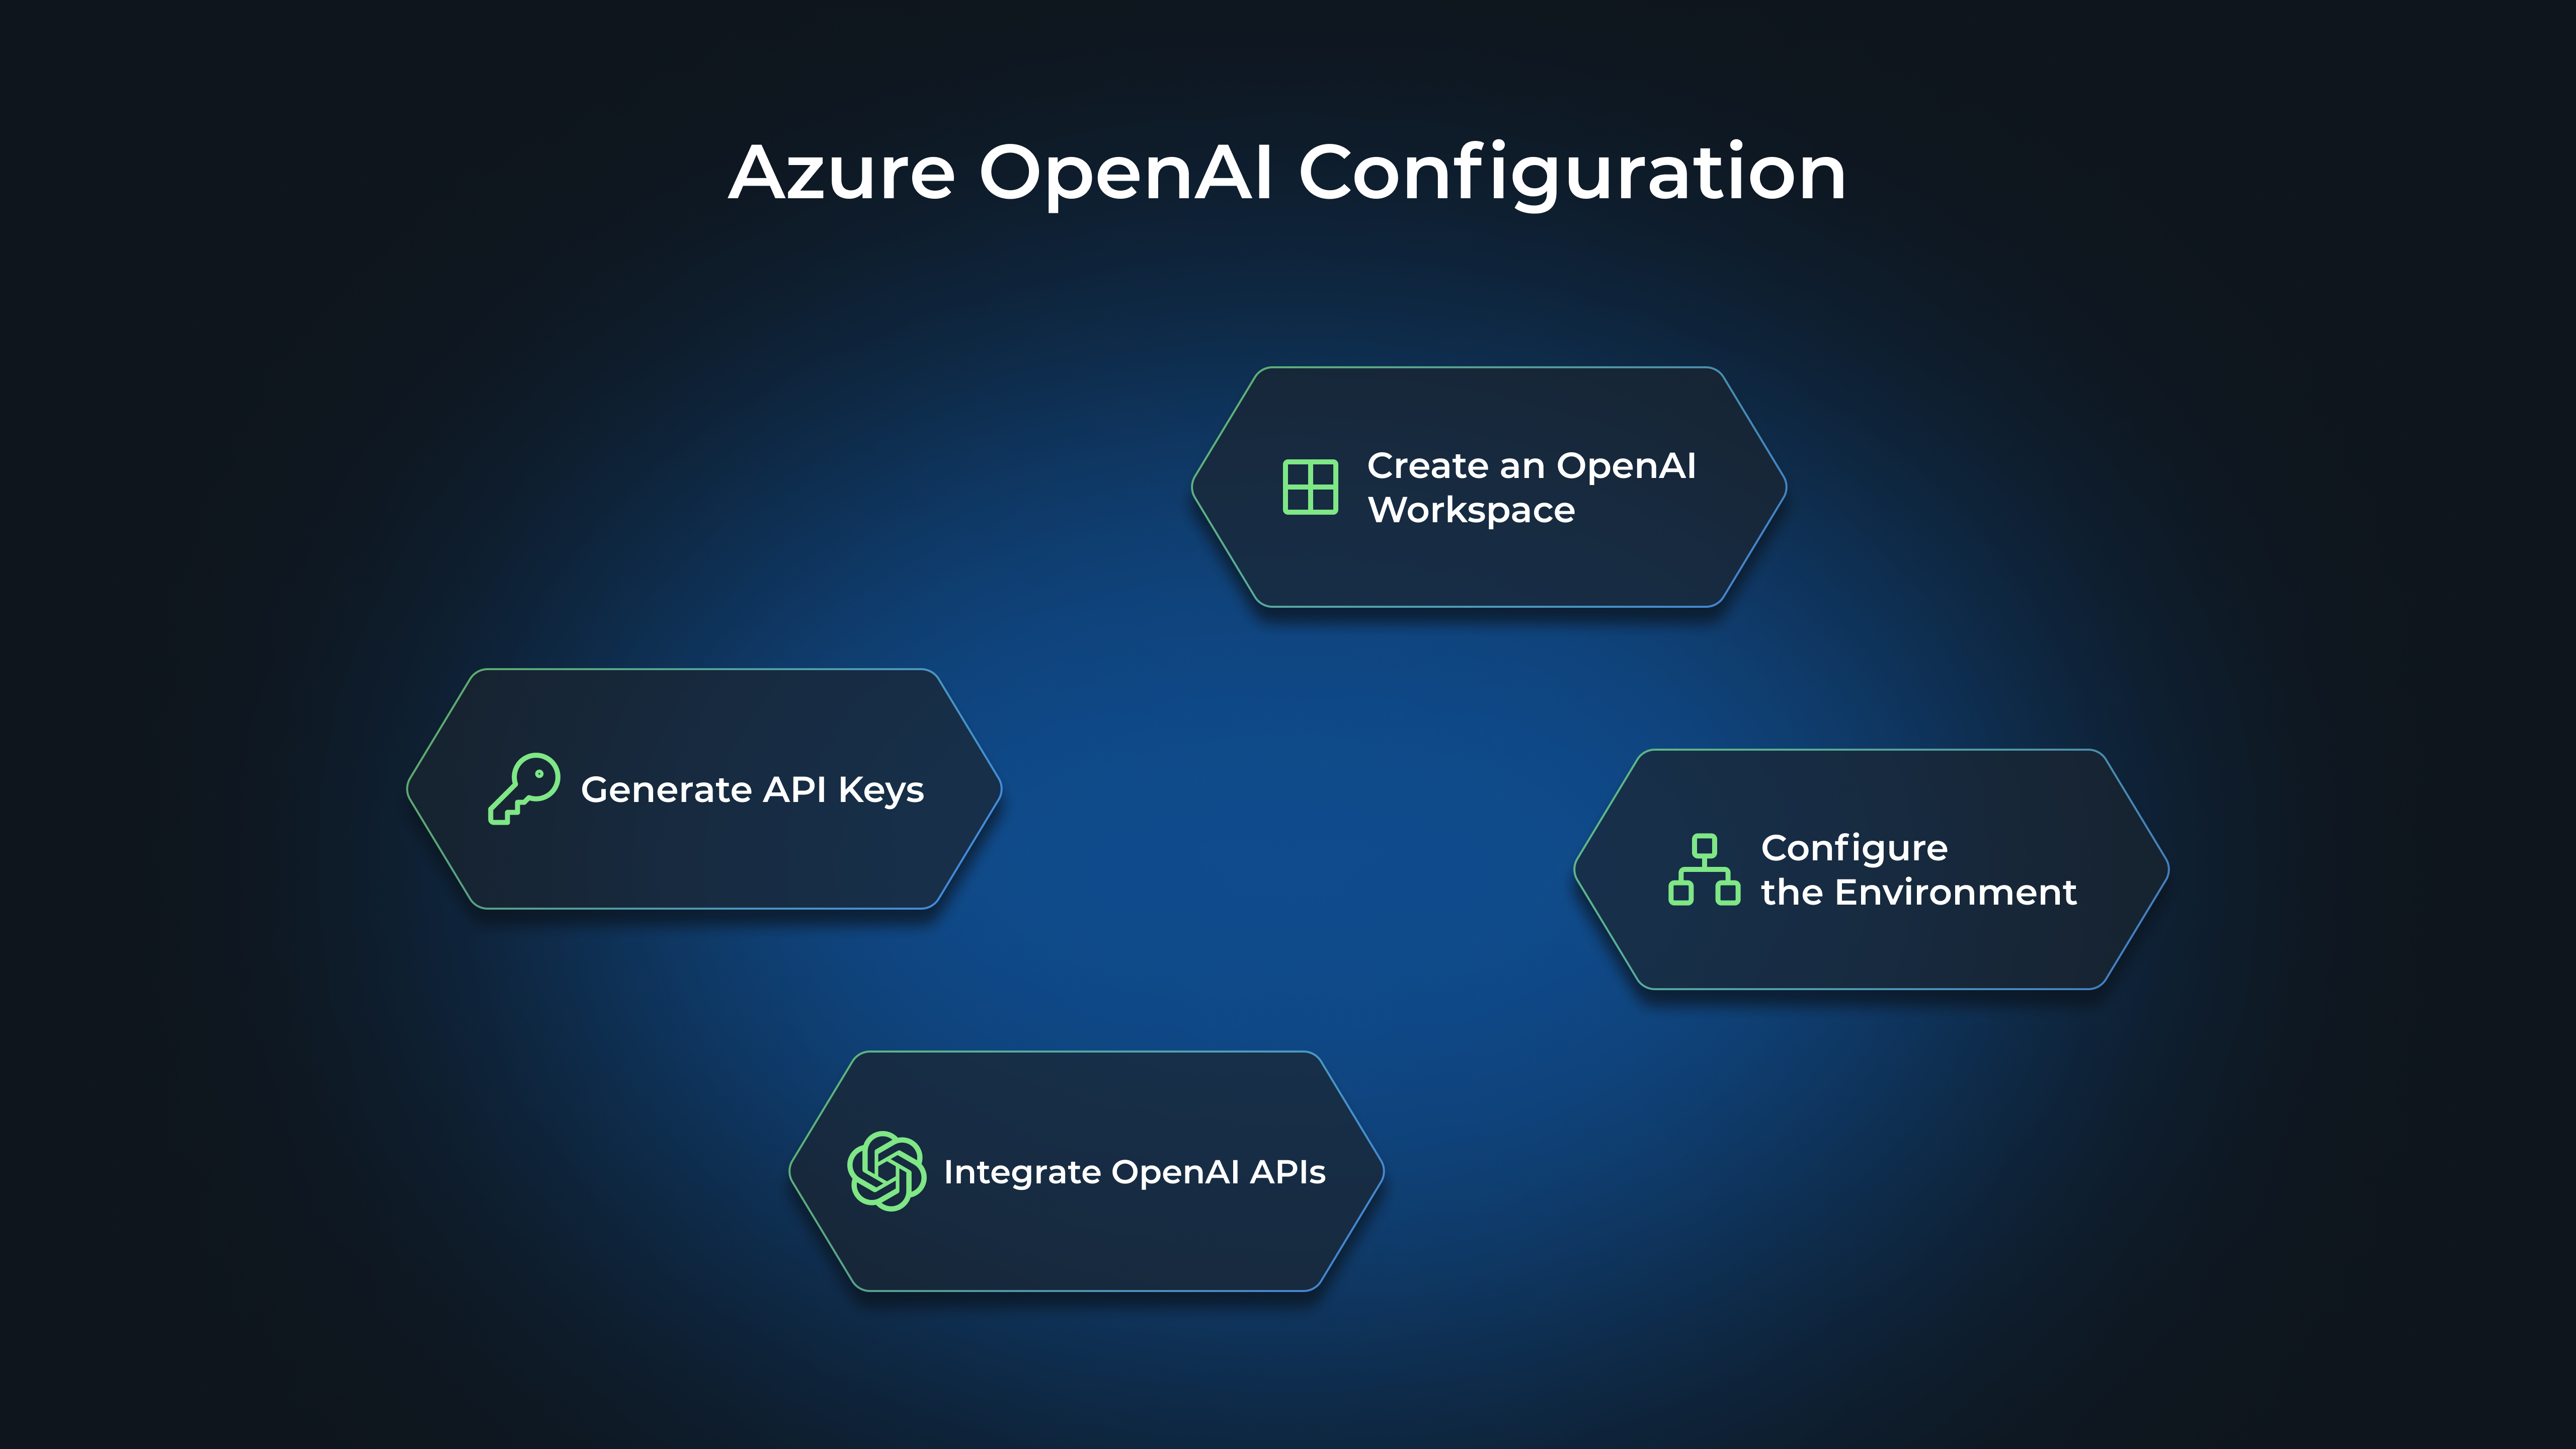 Azure OpenAI Configuration: Create an OpenAI Workspace, Generate API Keys, Configure the Environment, Integrate OpenAI APIs 
